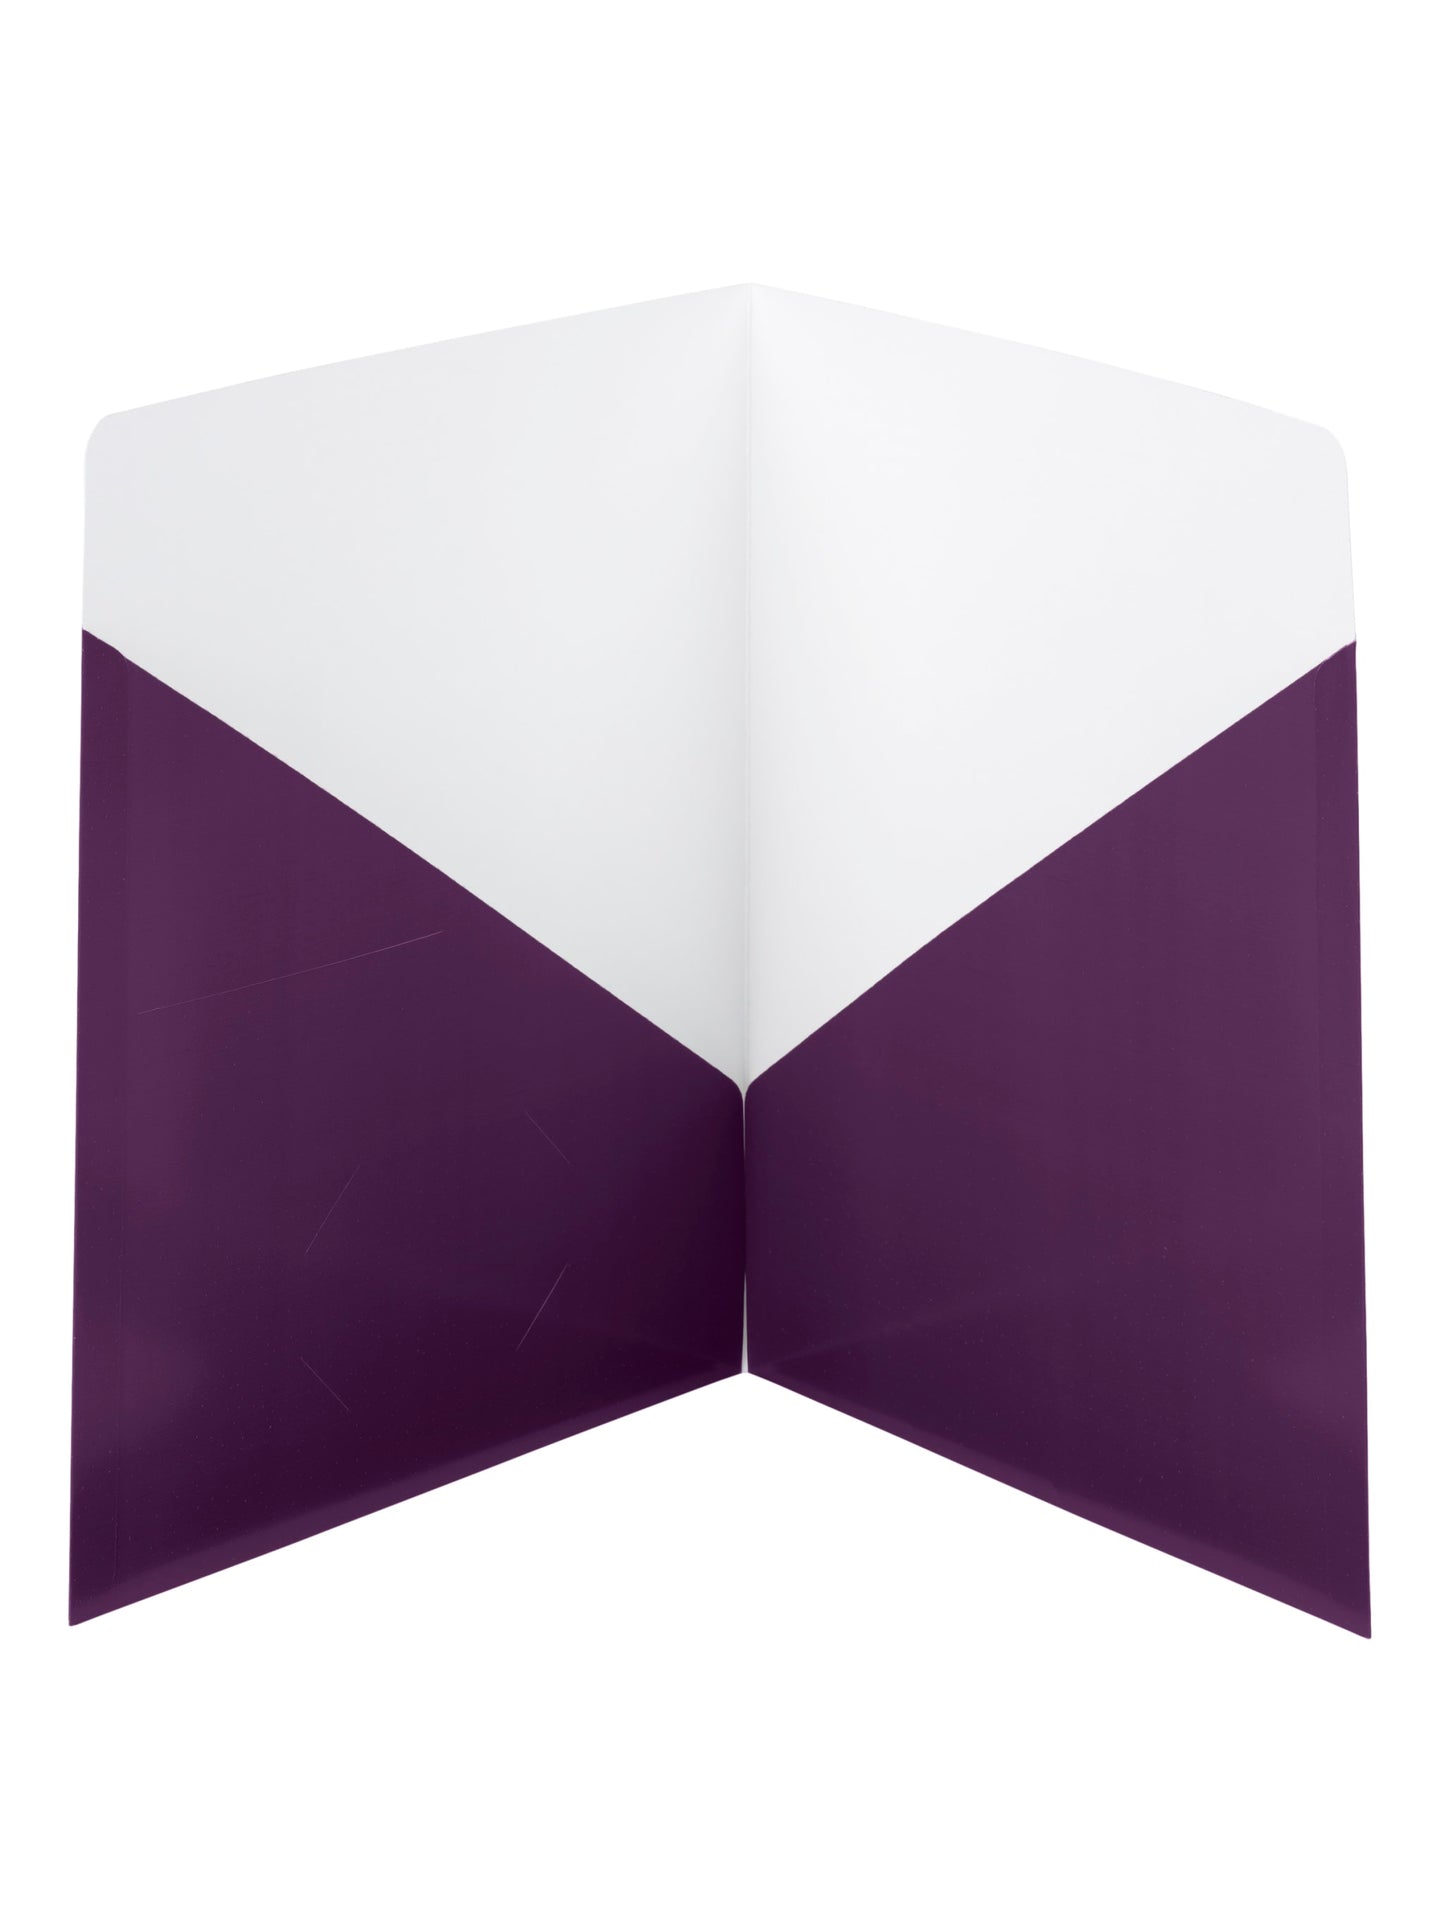 Contemporary Two-Pocket Folders, Purple Color, Letter Size, Set of 0, 30086486879614